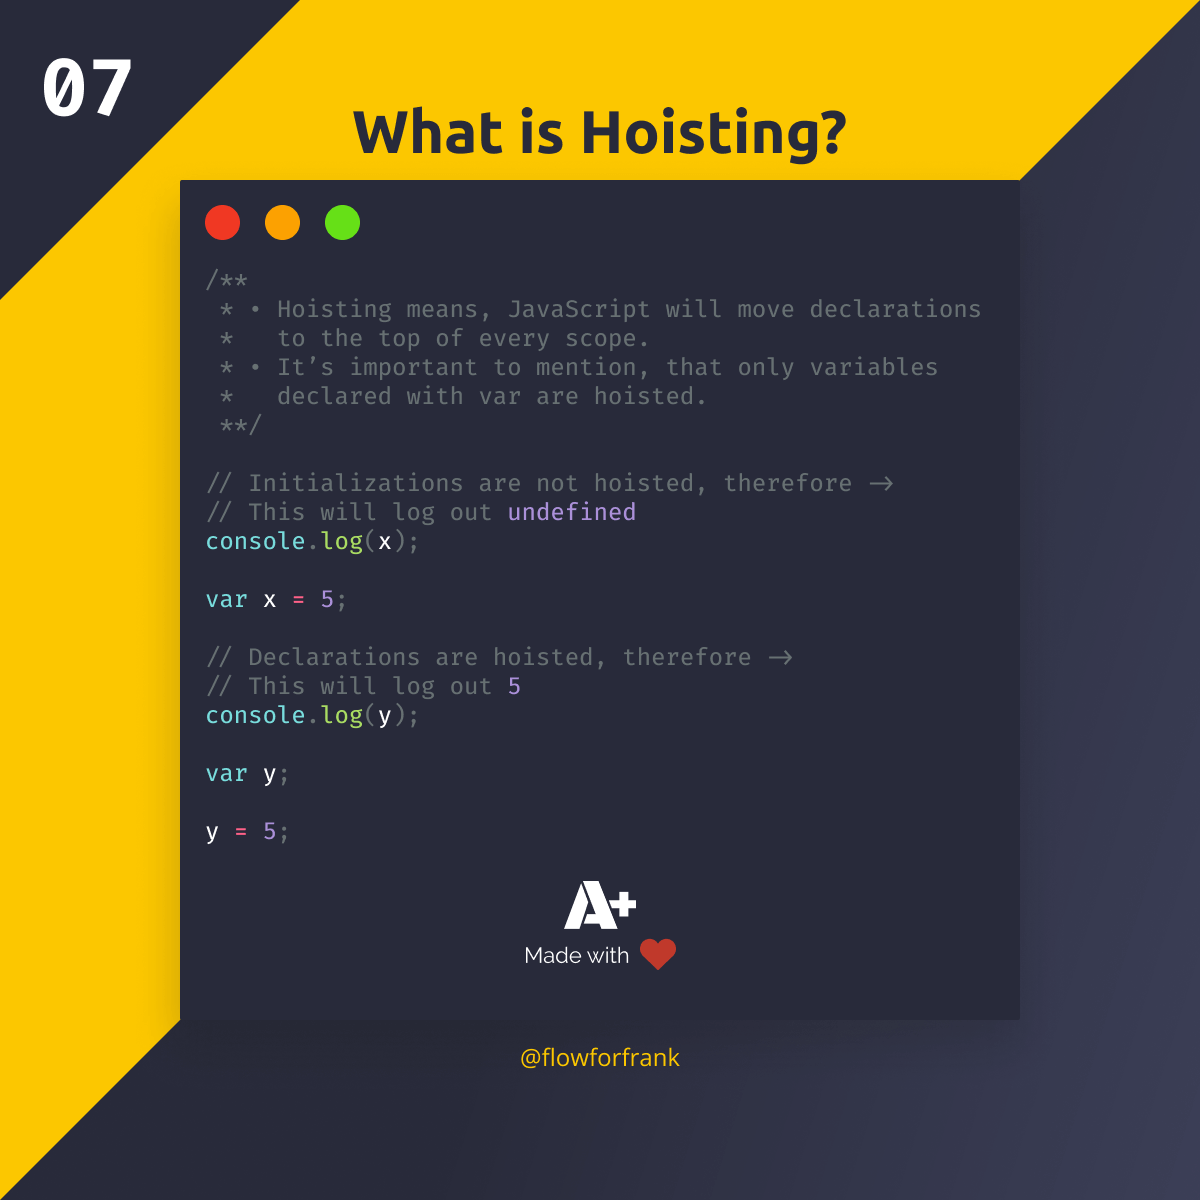 What is Hoisting in JavaScript?